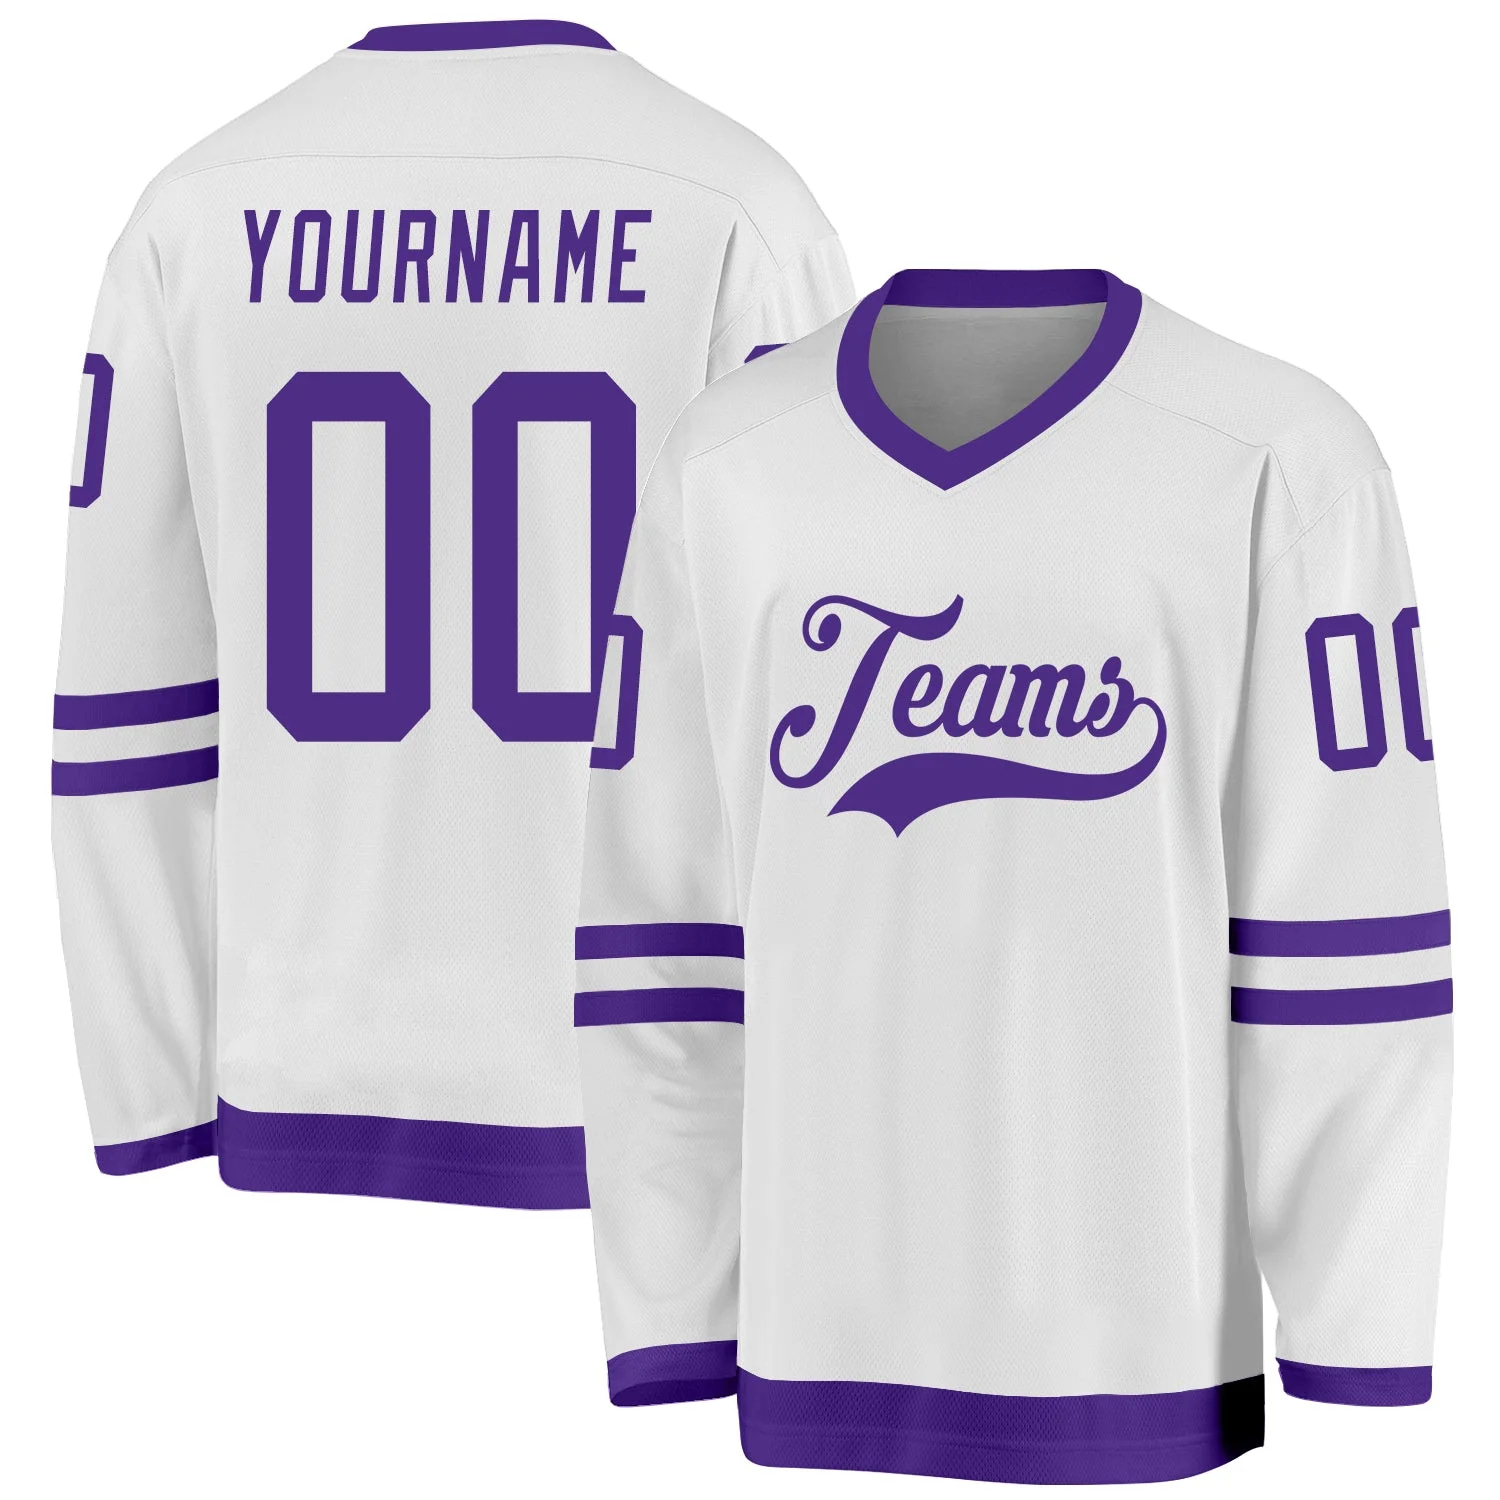 Stitched And Print White Purple Hockey Jersey Custom